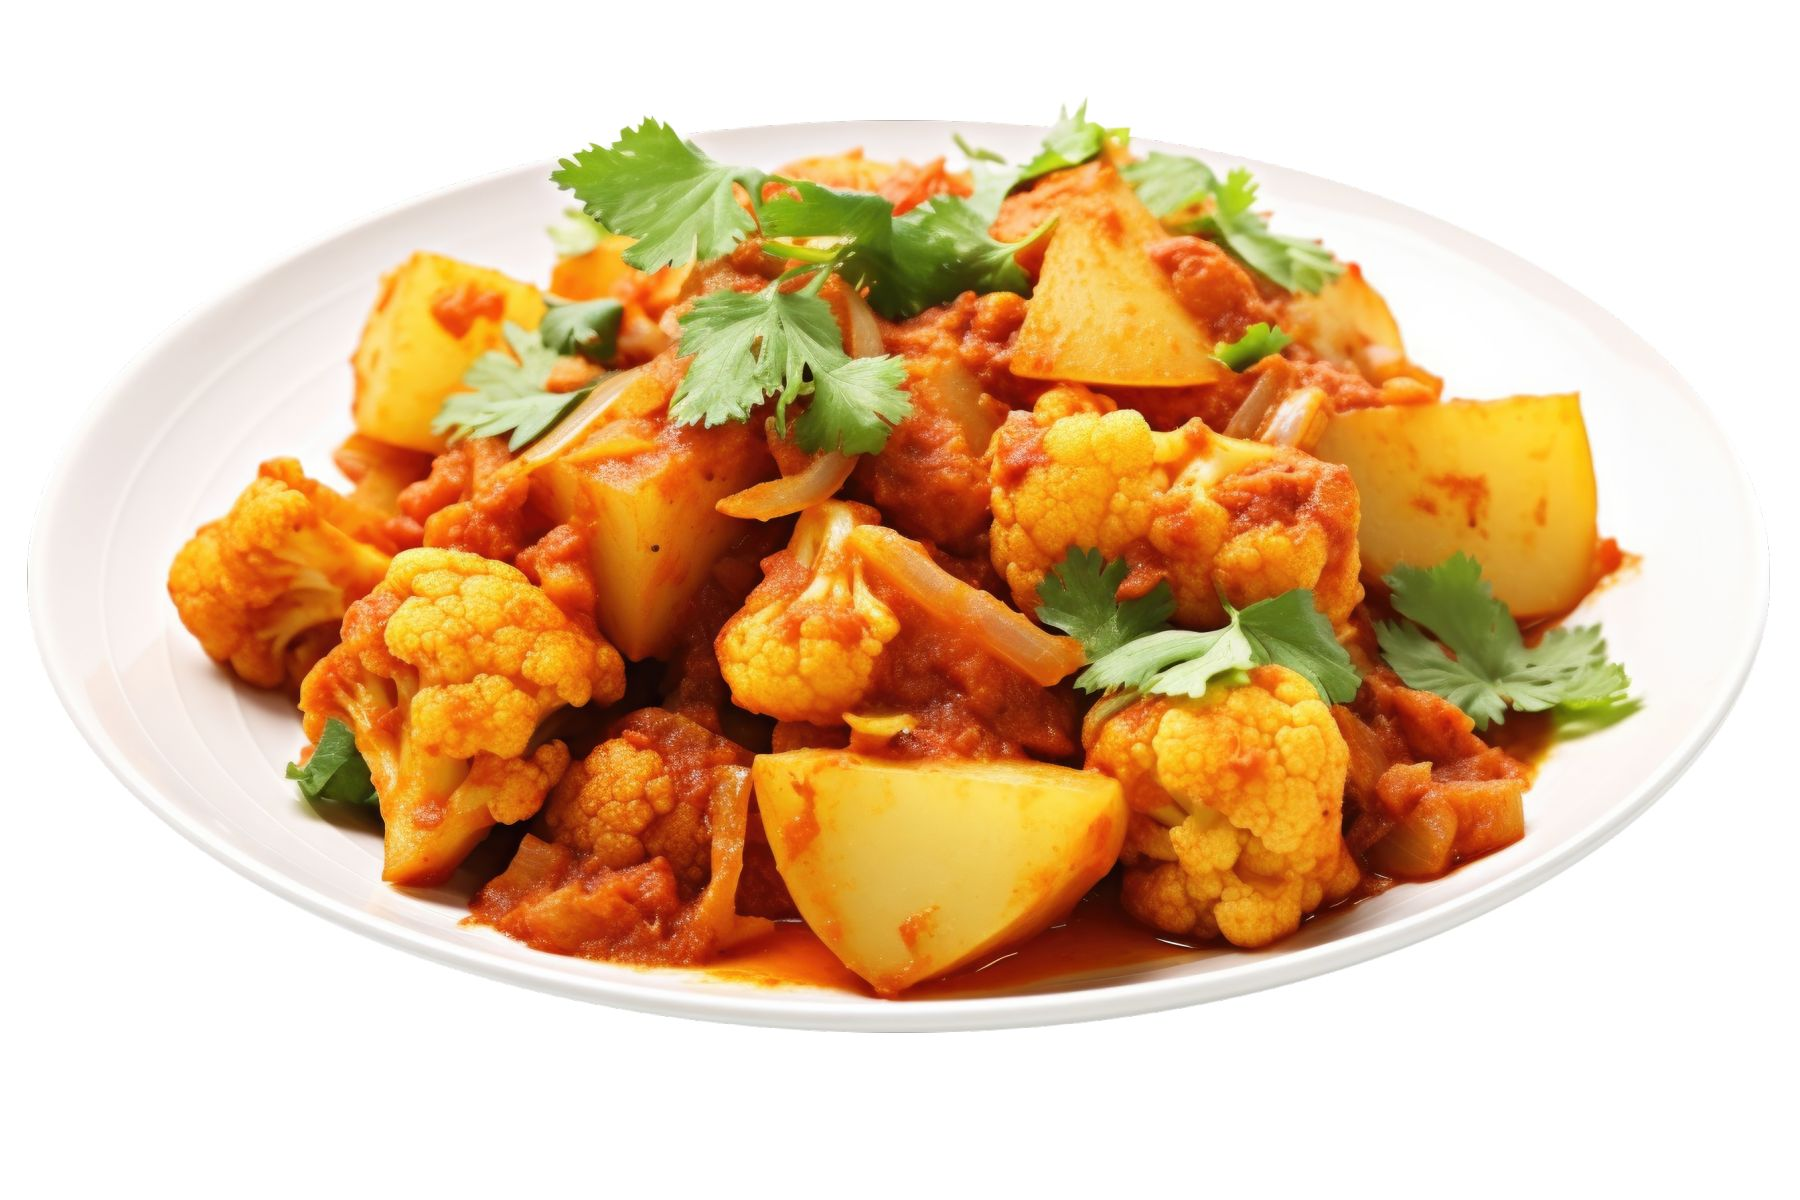 Delicious homemade Indian aloo gobi sabji, a classic staple dish with potatoes and cauliflower